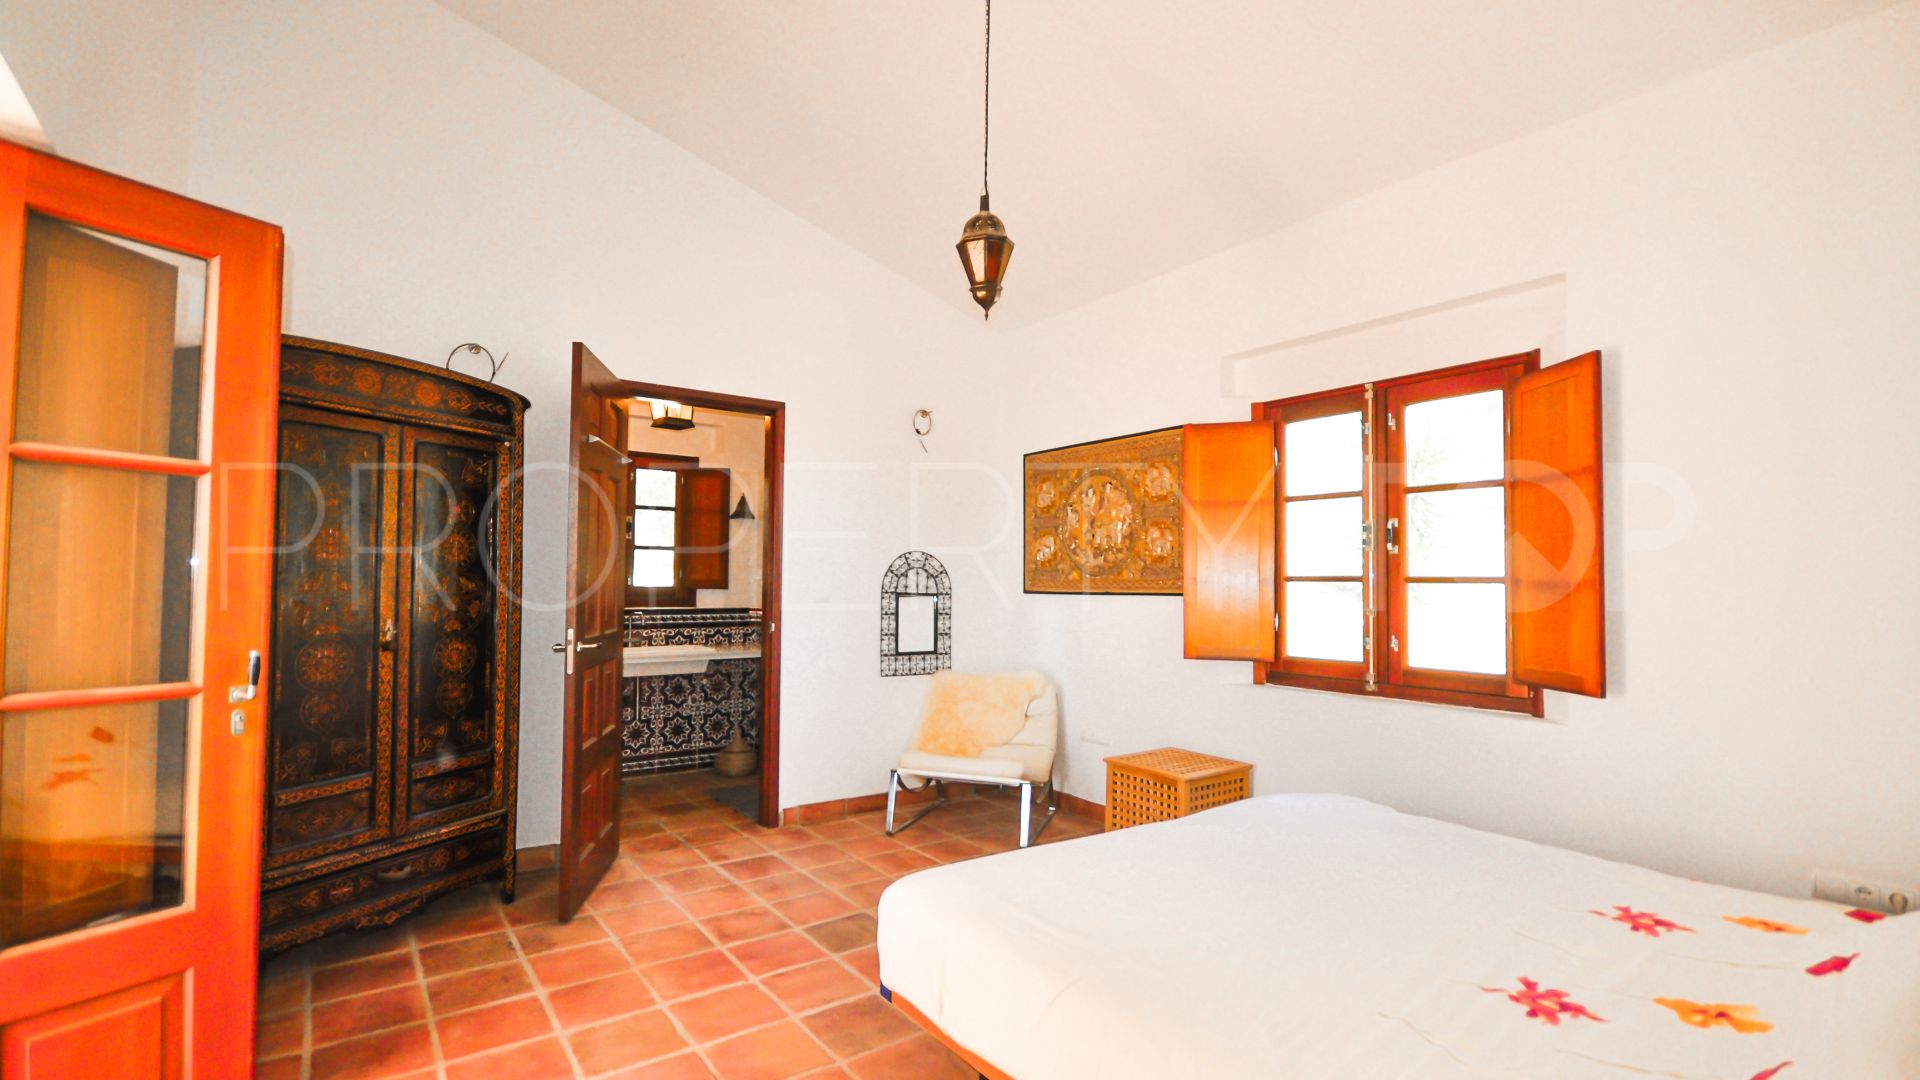 8 bedrooms villa in Alcaucin for sale